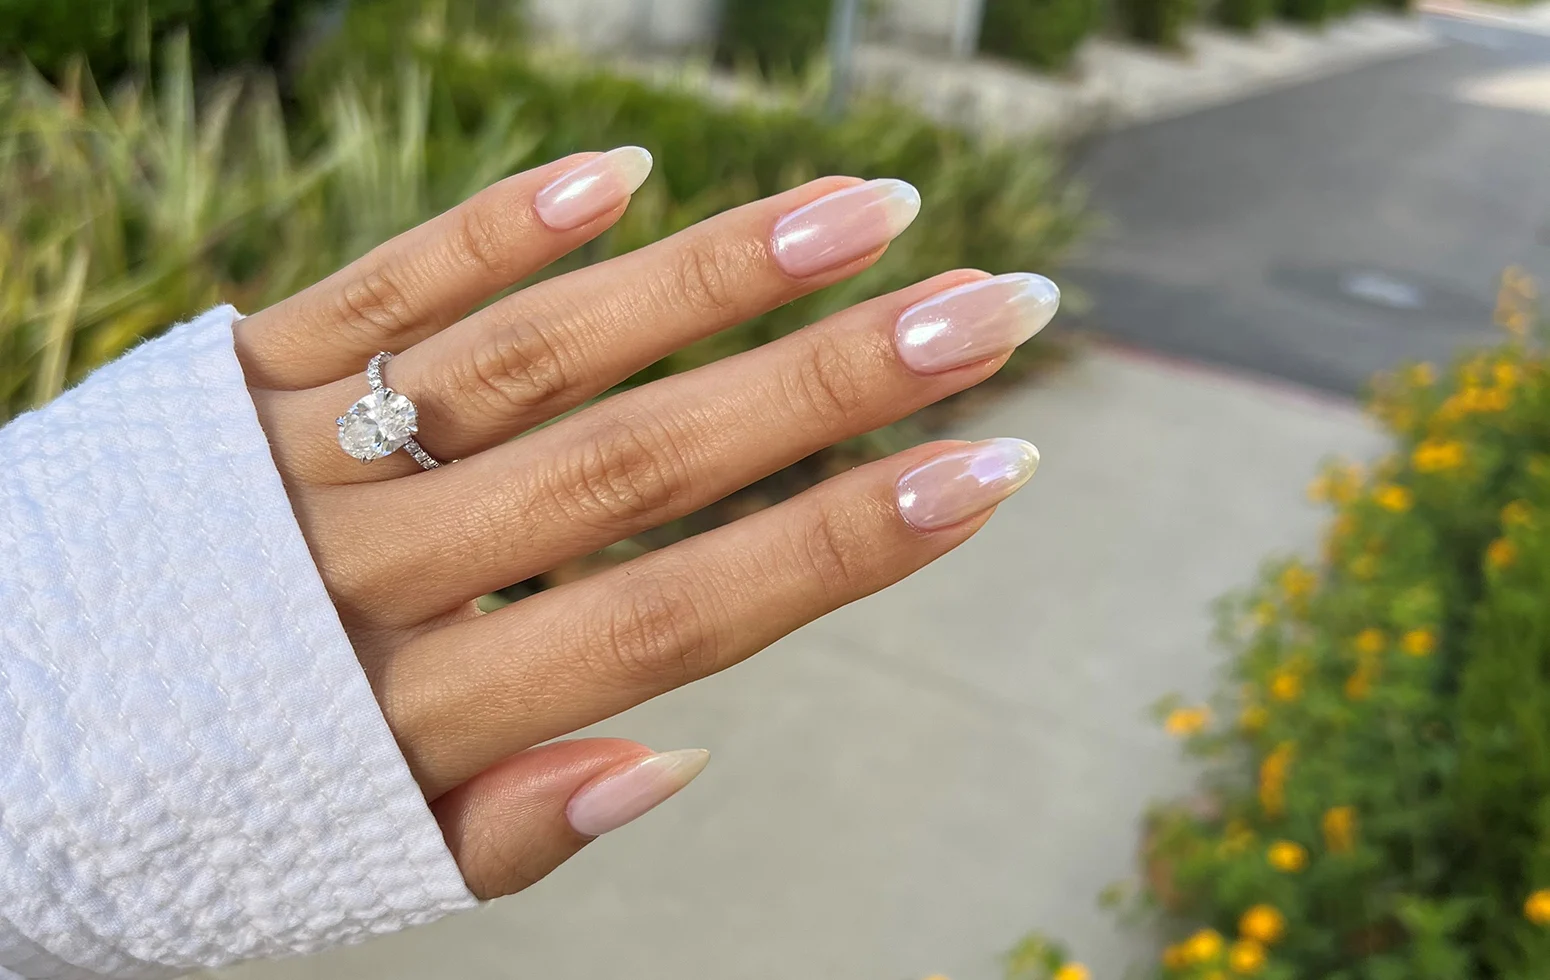 2. Glazed nails